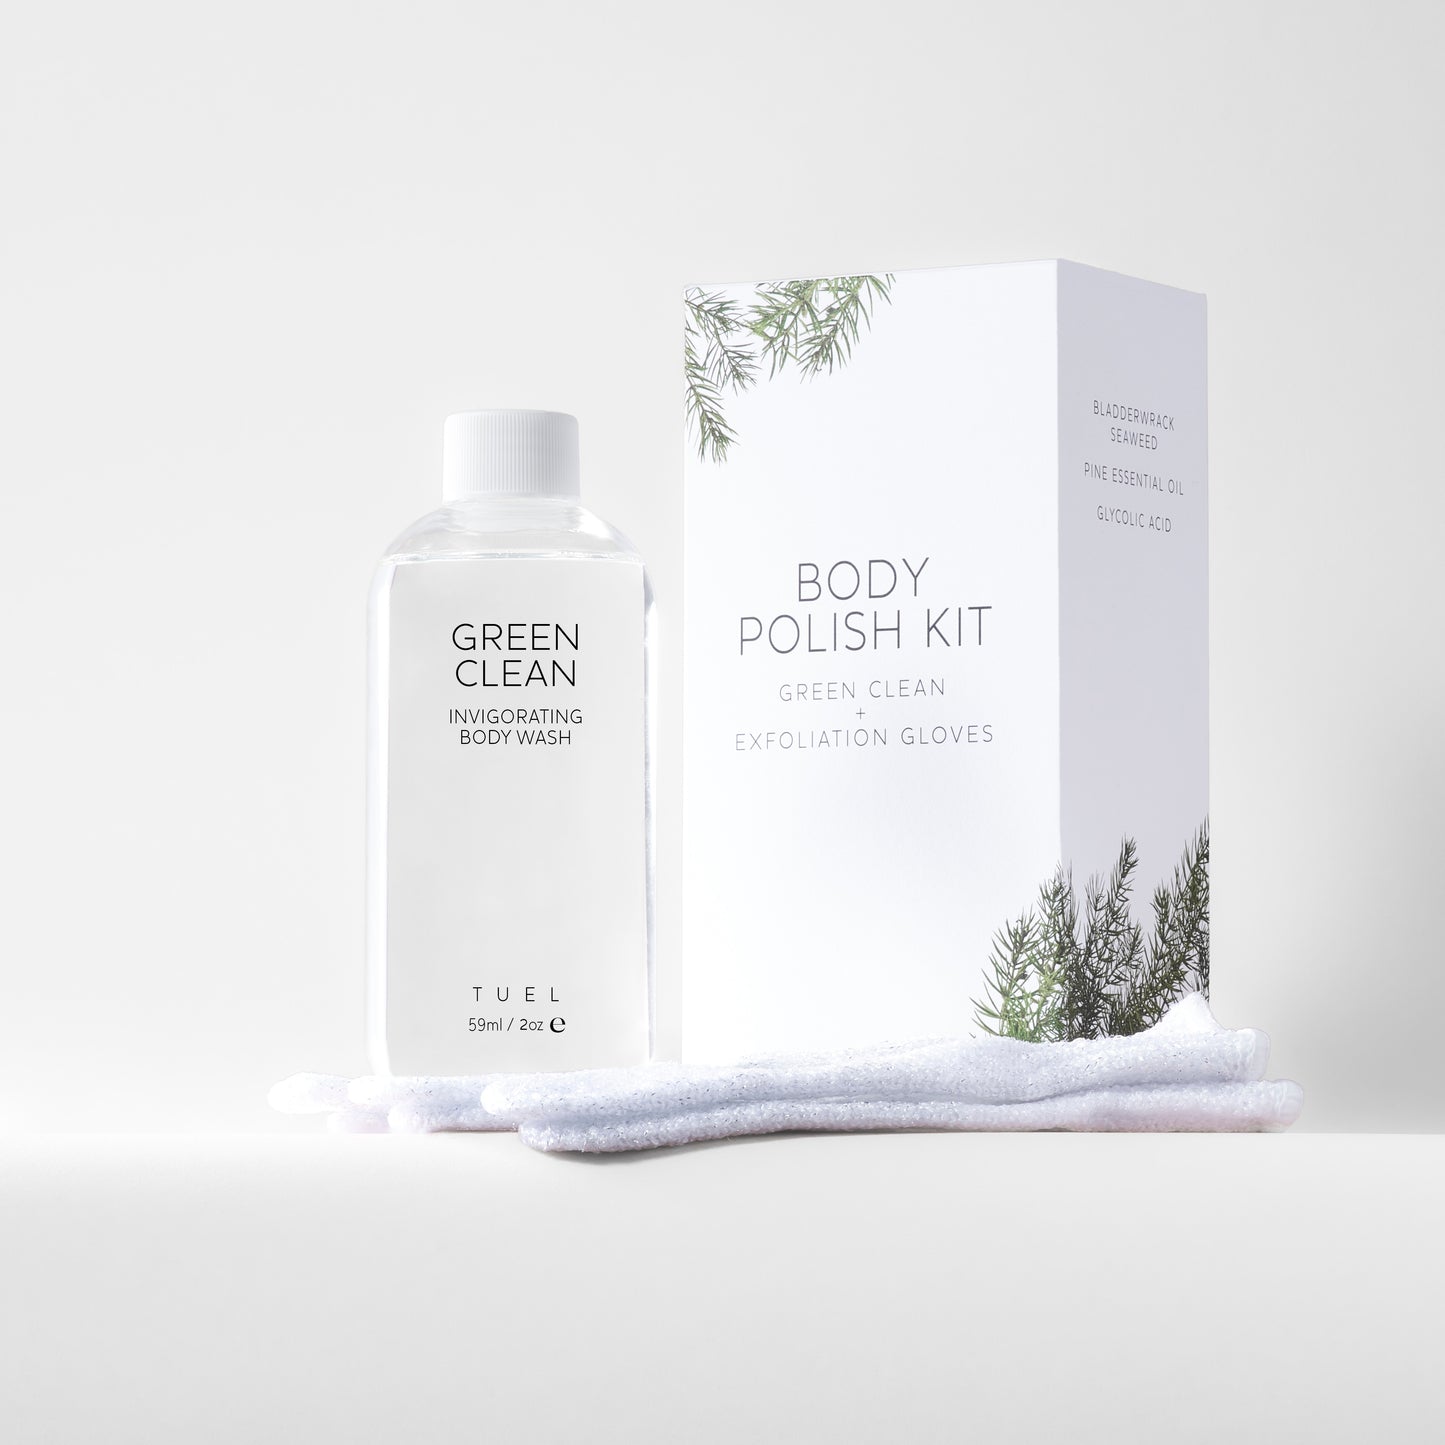 Tuel Body Polish Kit includes Green Clean